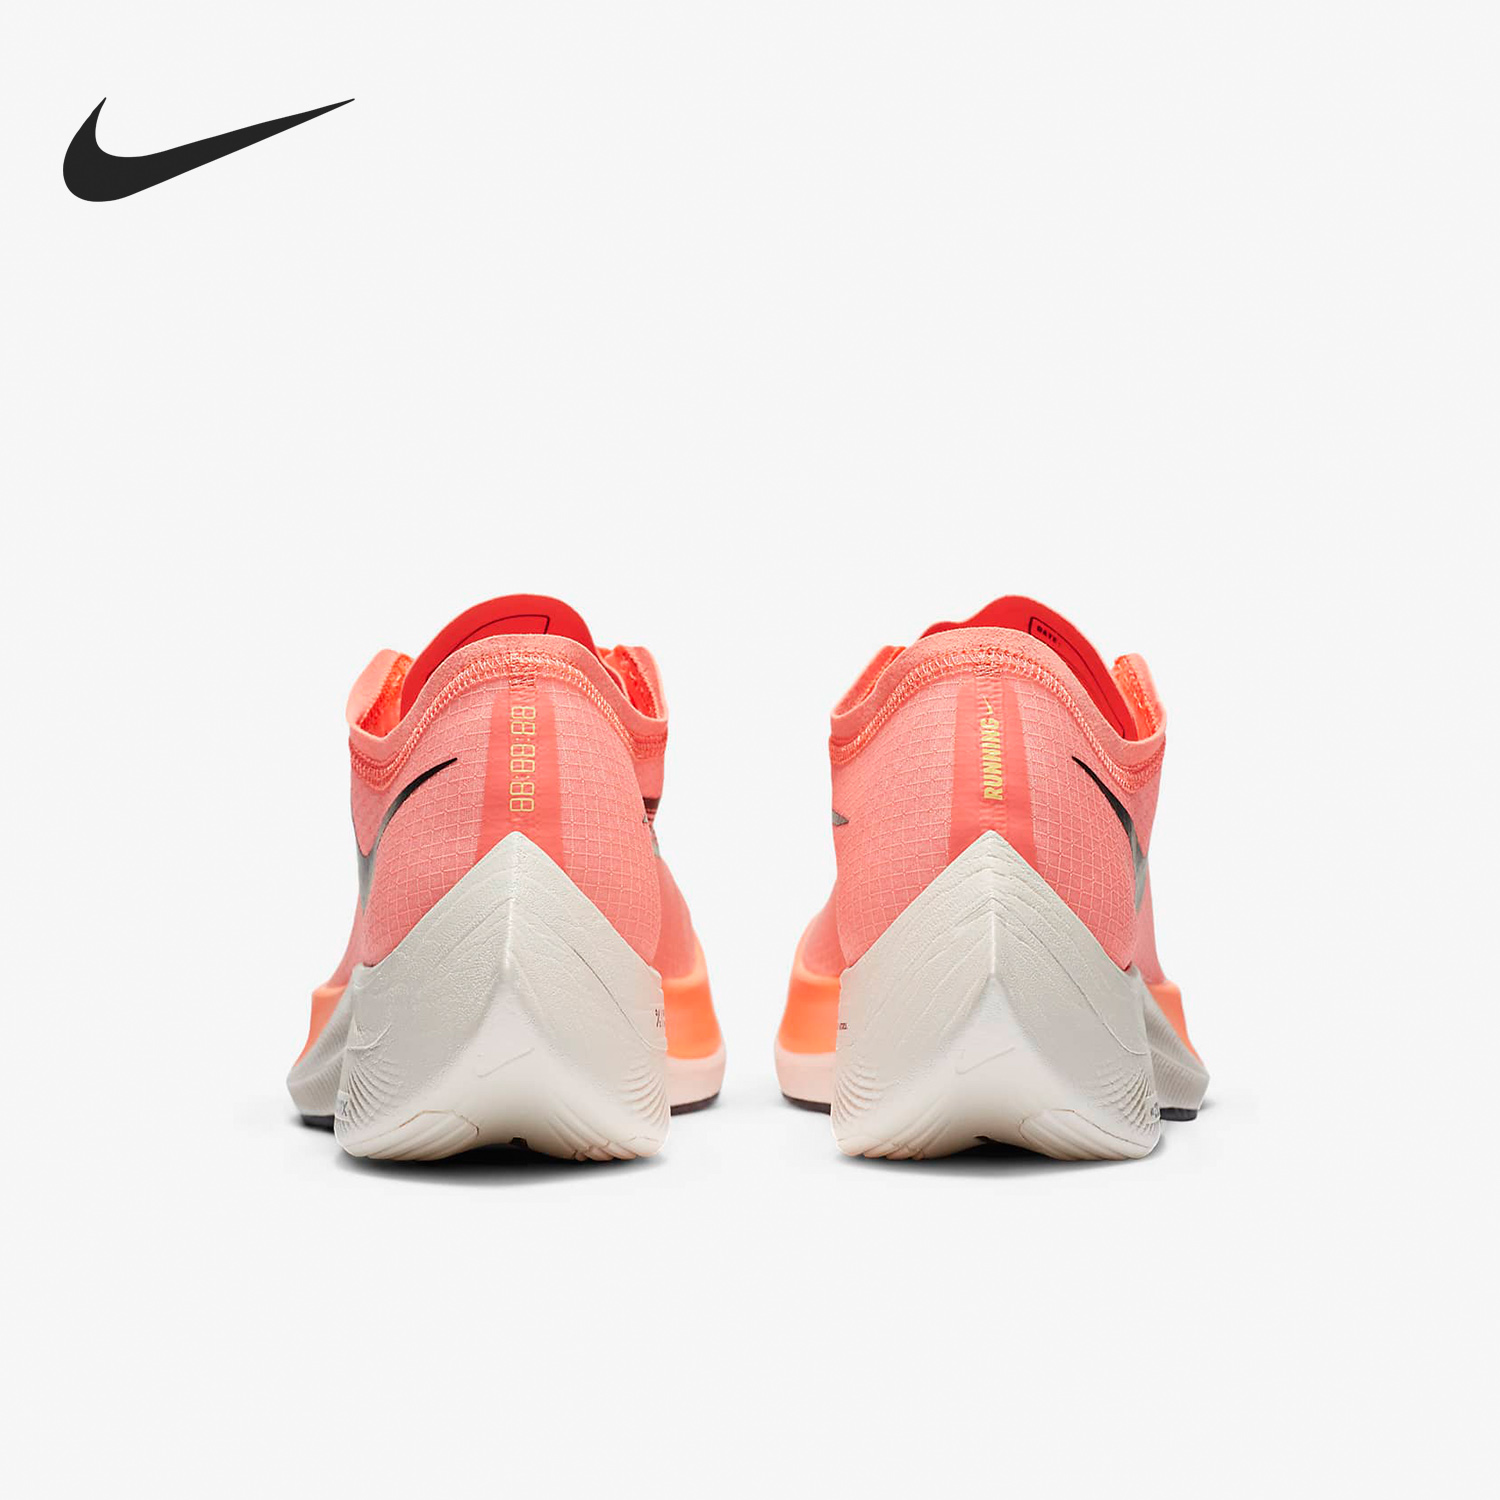 Nike/耐克正品ZOOMX VAPORFLY NEXT%男/女跑步鞋秋透气AO4568-800 运动鞋new 跑步鞋 原图主图